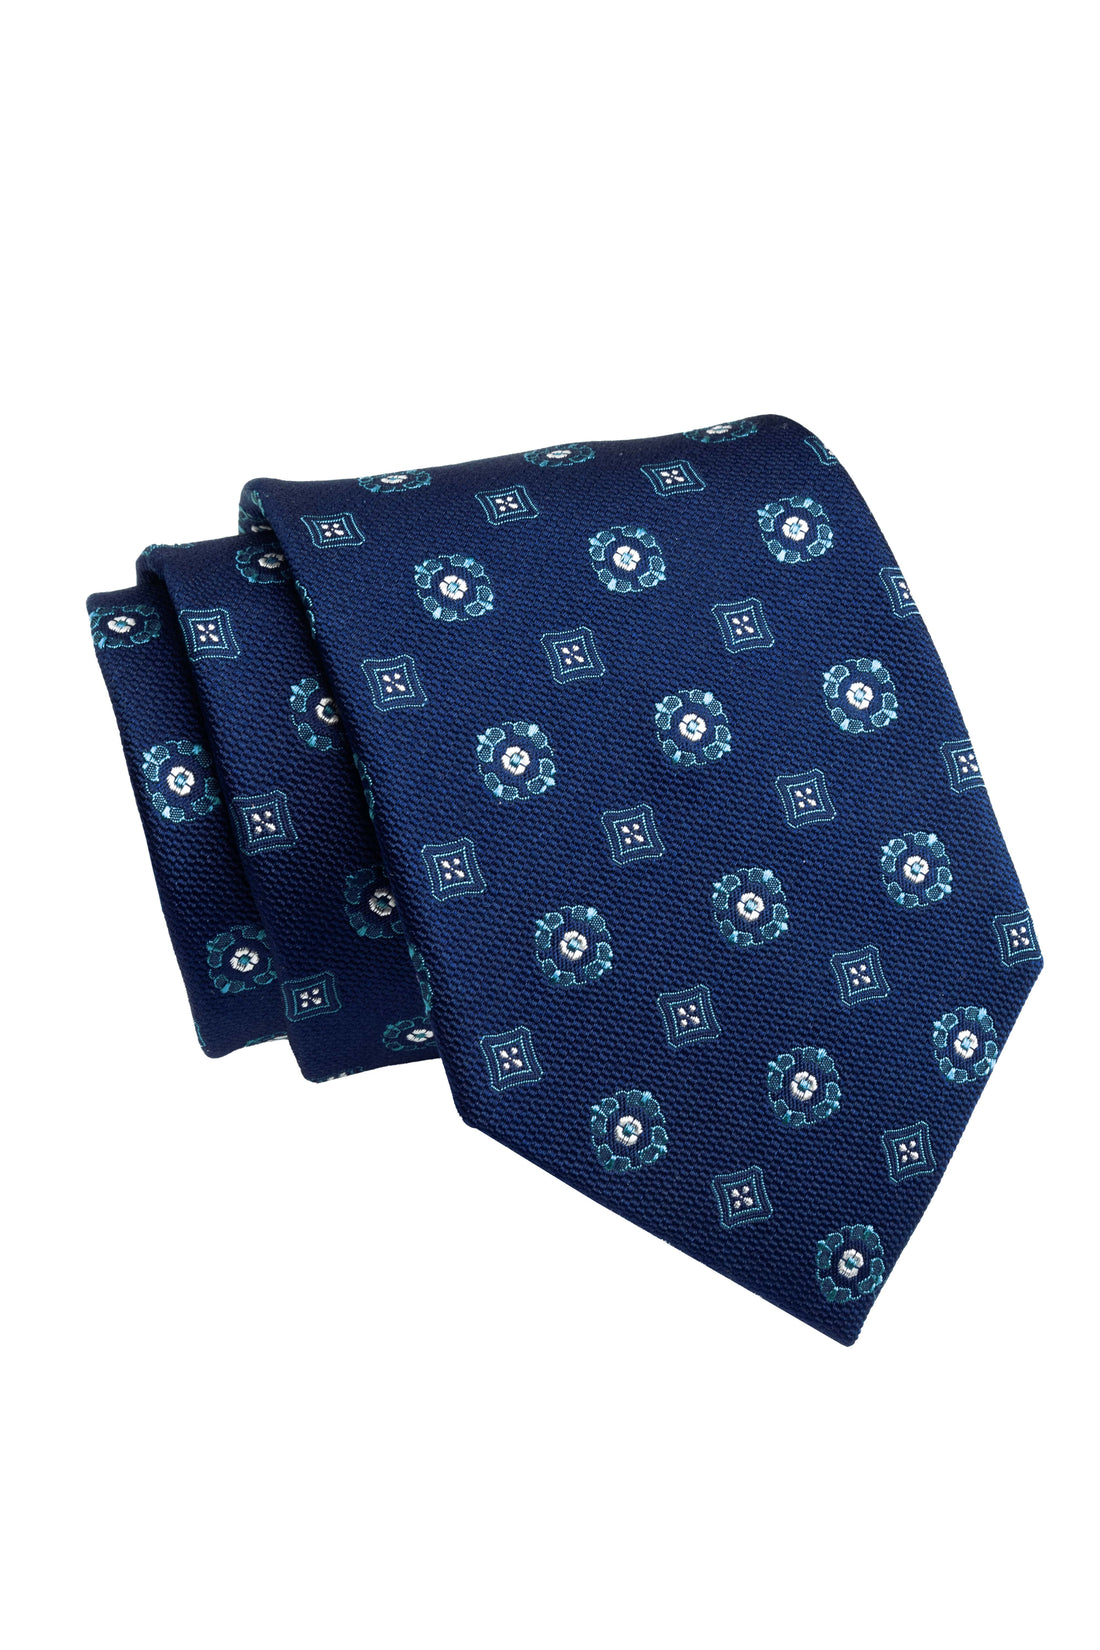 Navy & Turquoise Geometric Foulard Silk Tie